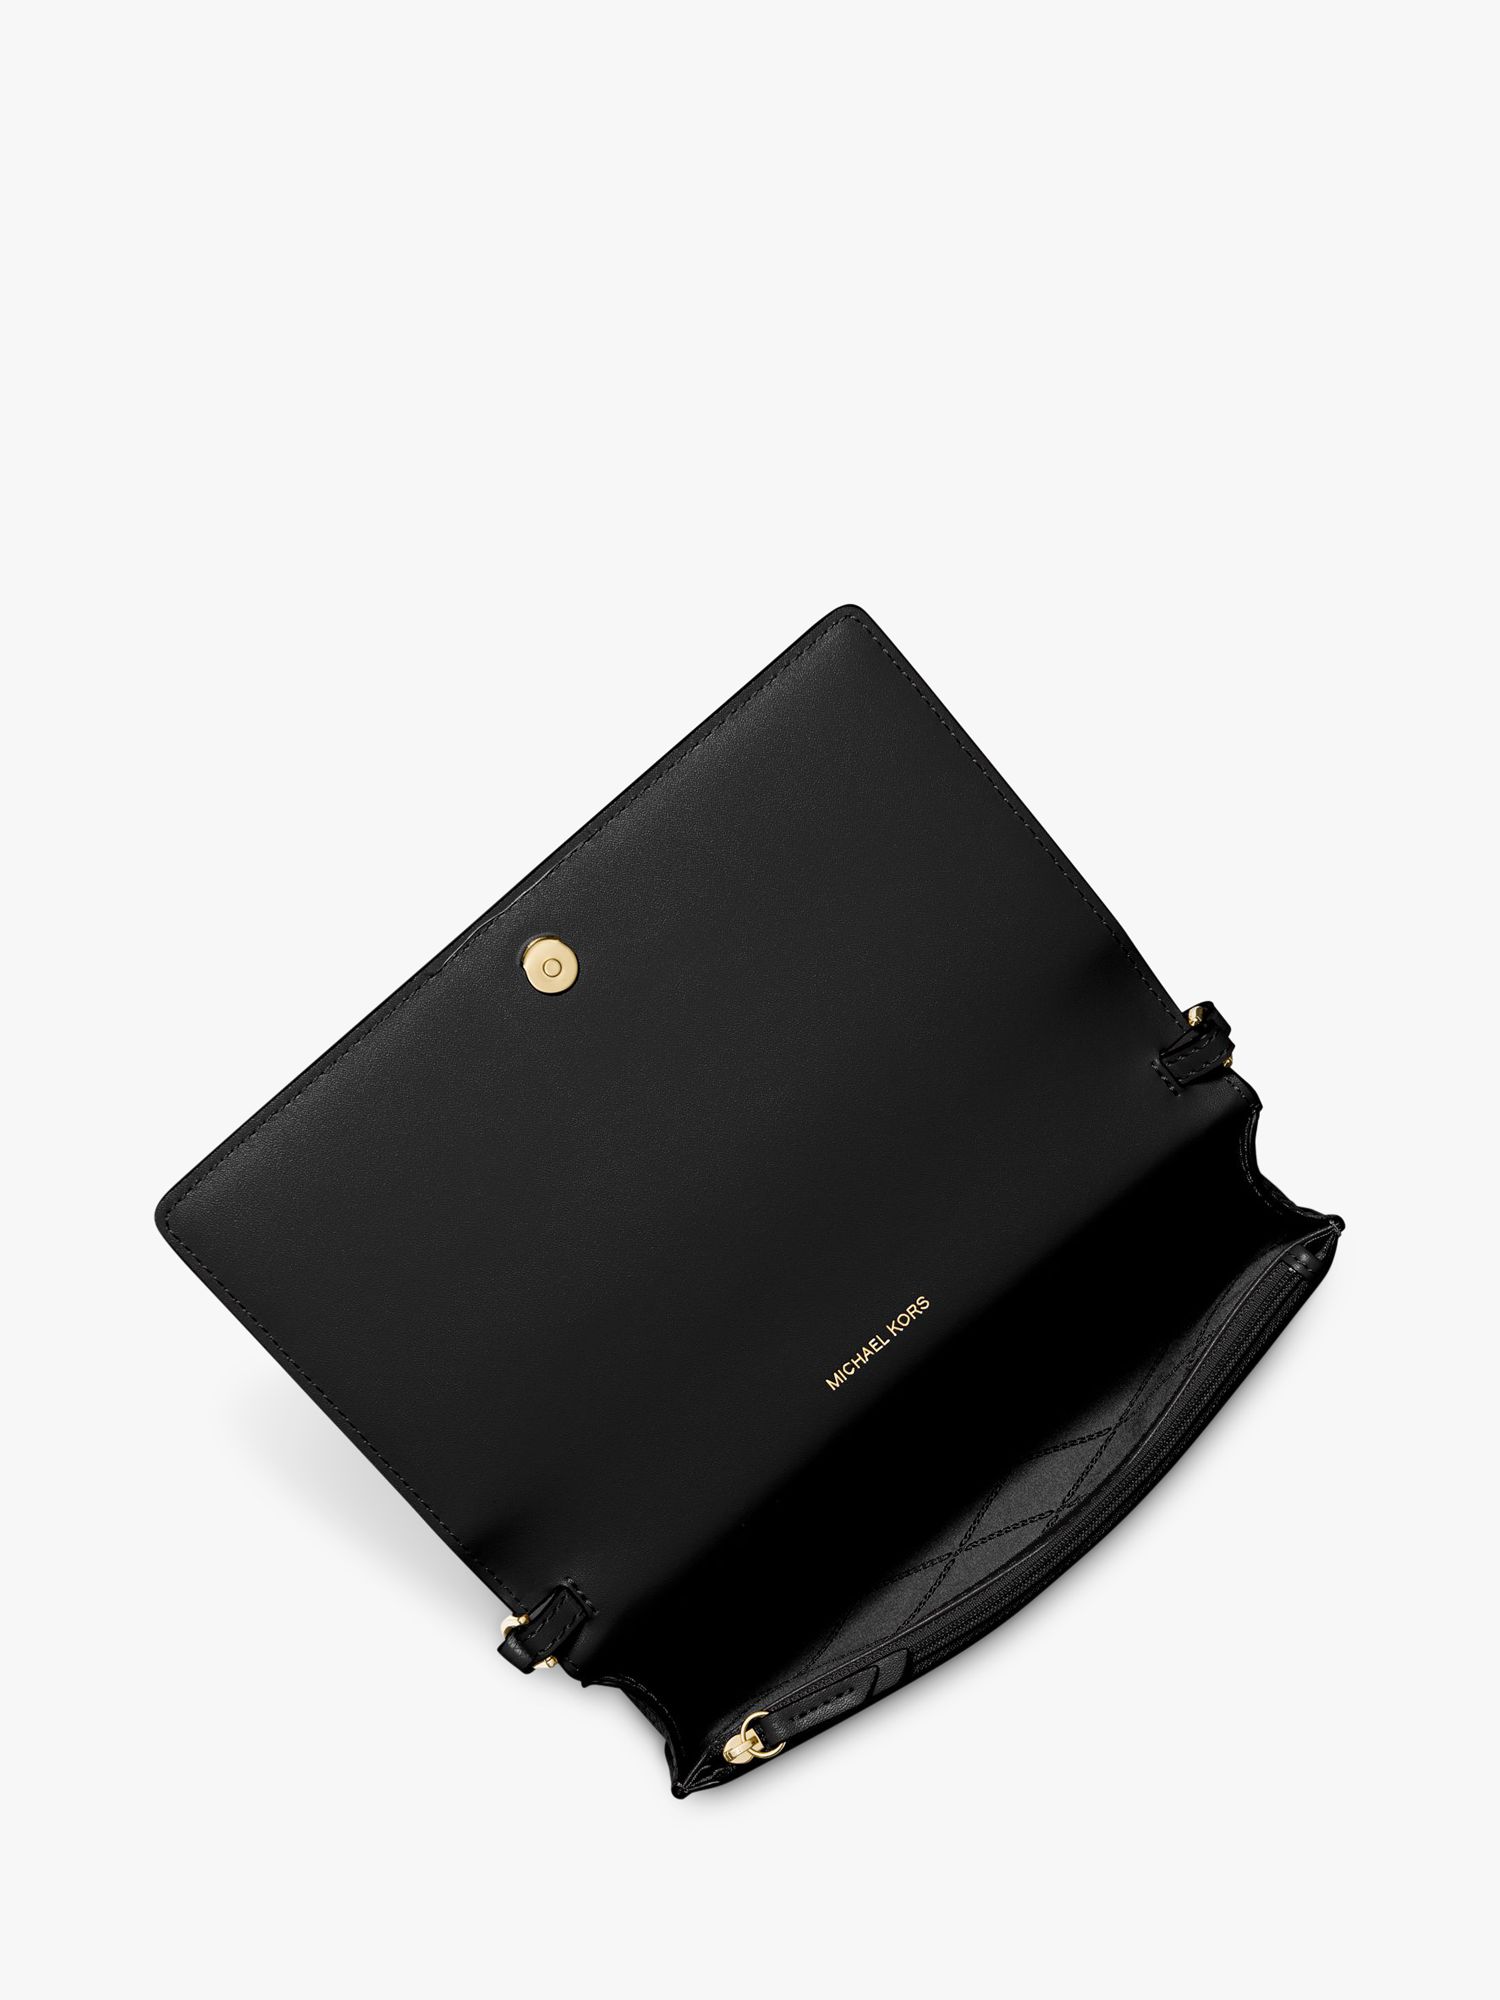 Buy Michael Kors Jet Set Leather Crossbody Bag Online at johnlewis.com